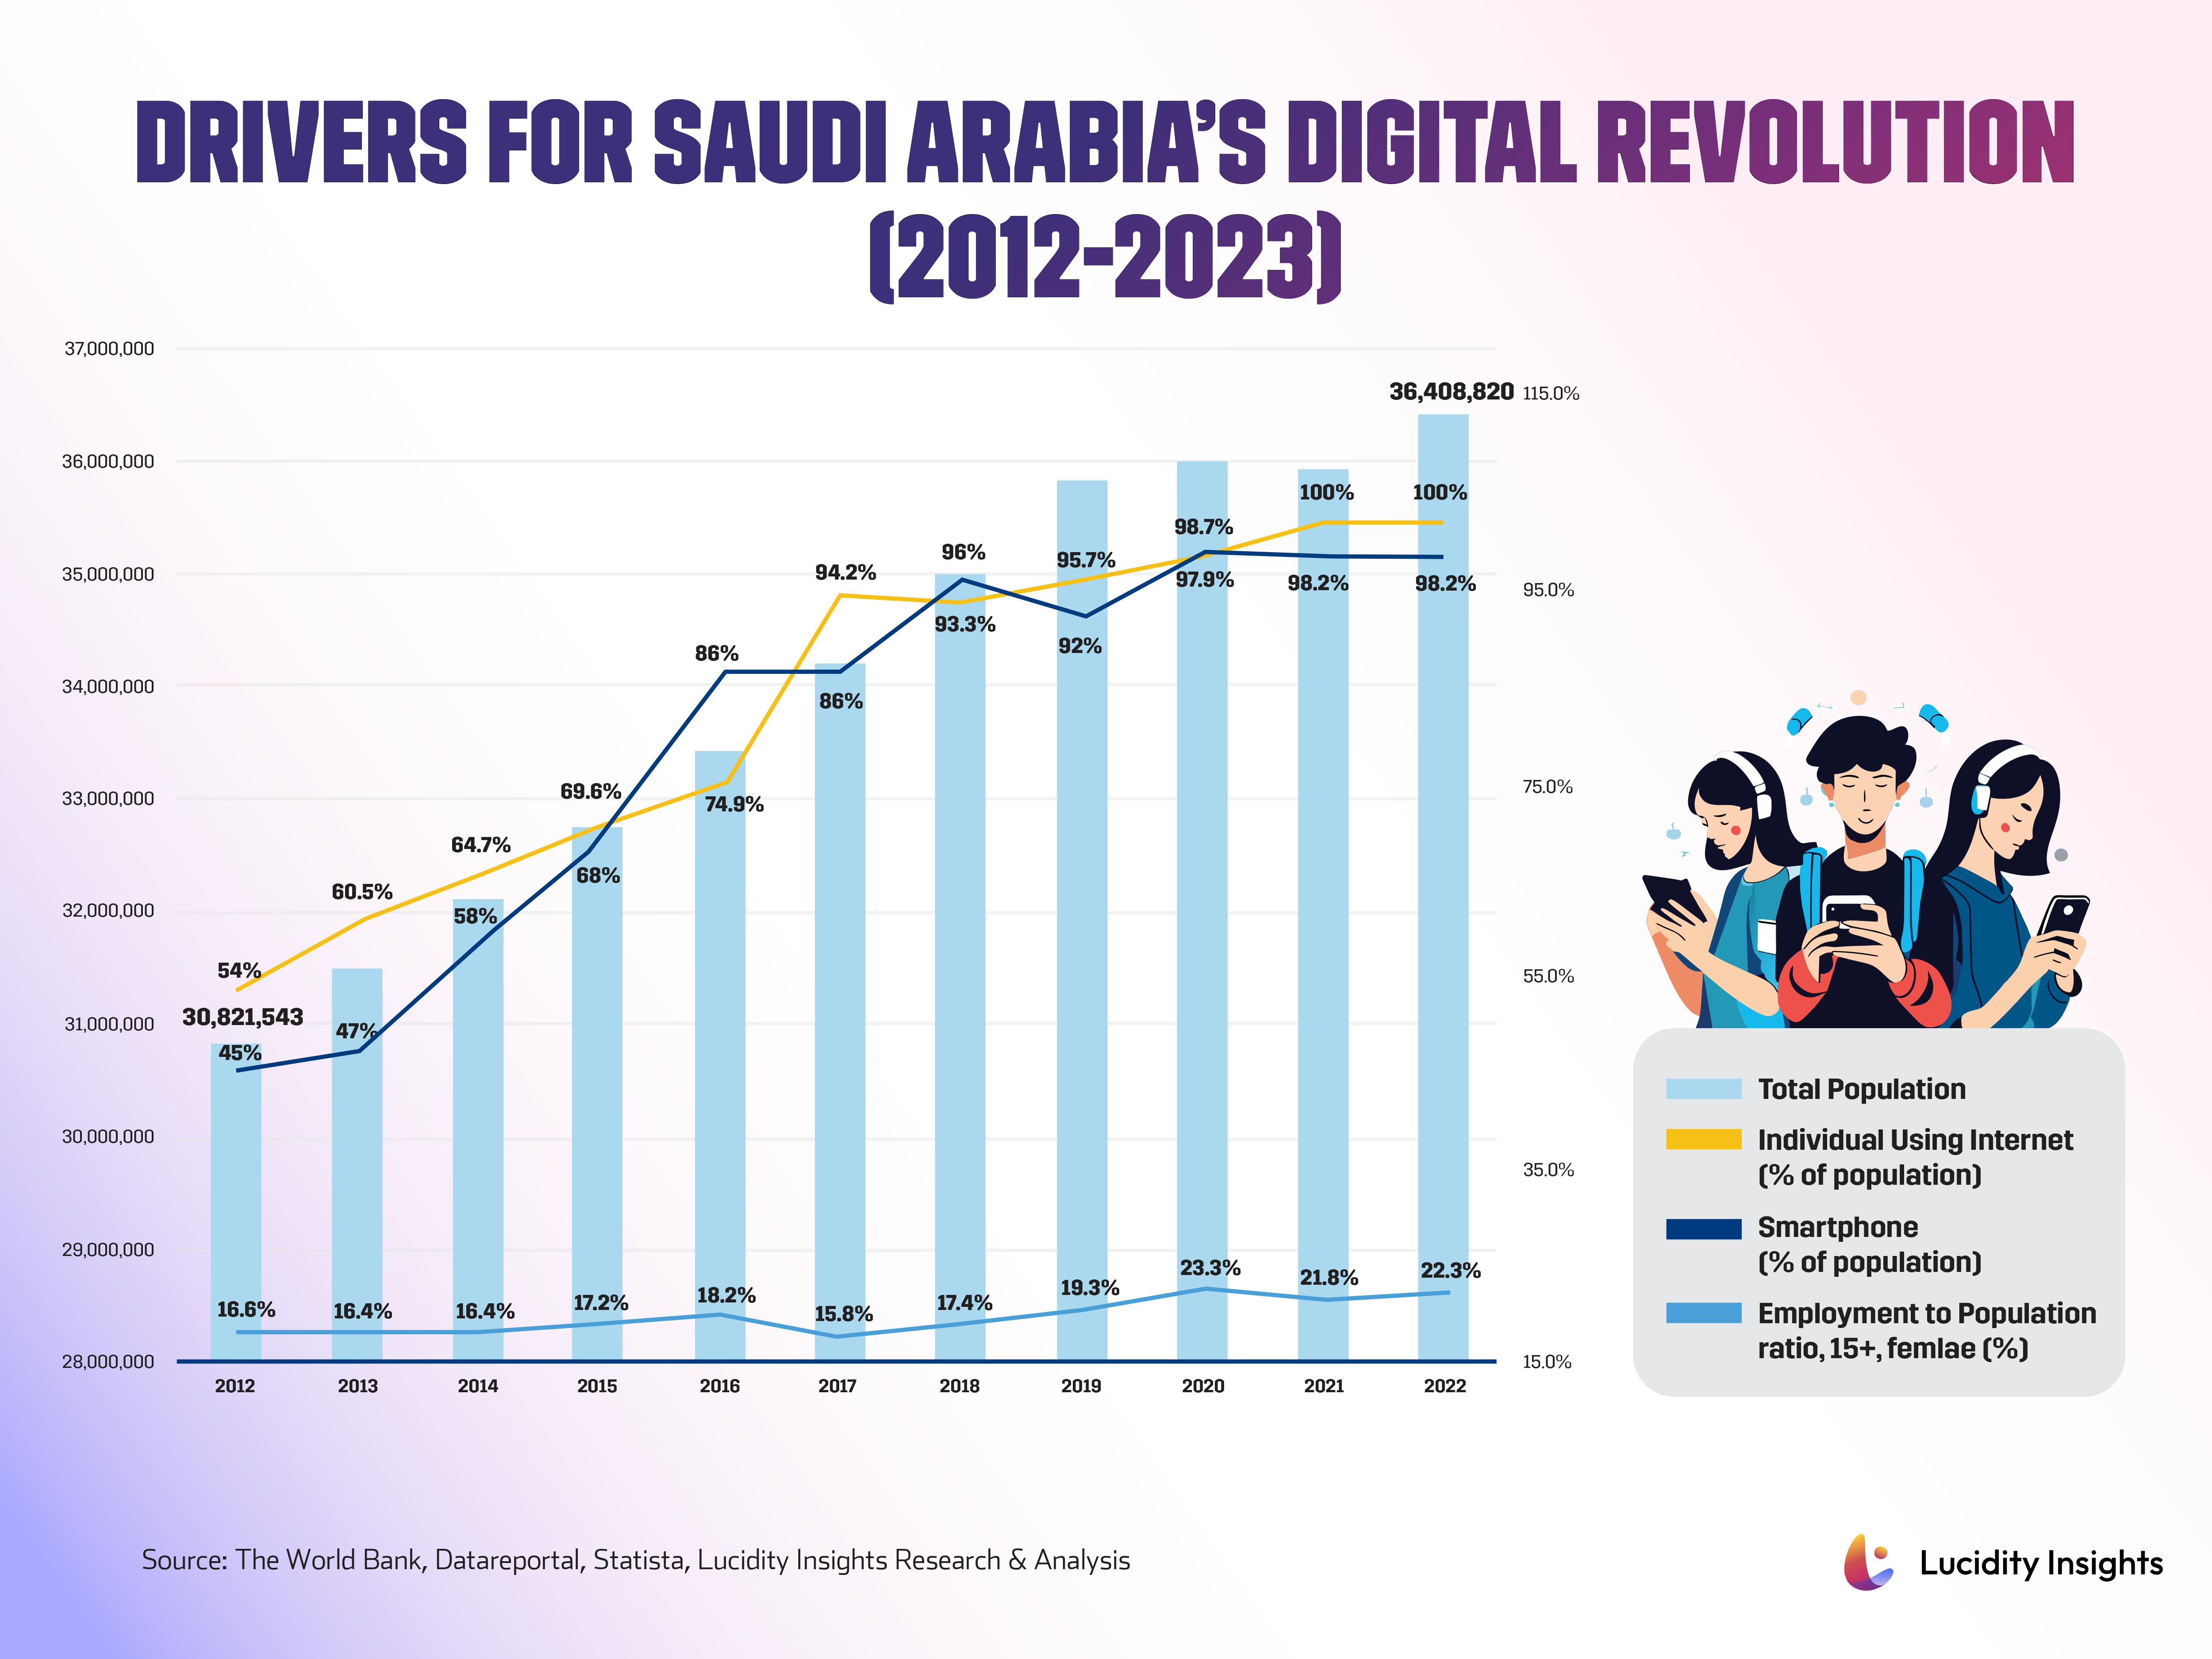 Drivers for Saudi Arabia’s Digital Revolution (2012-2023)